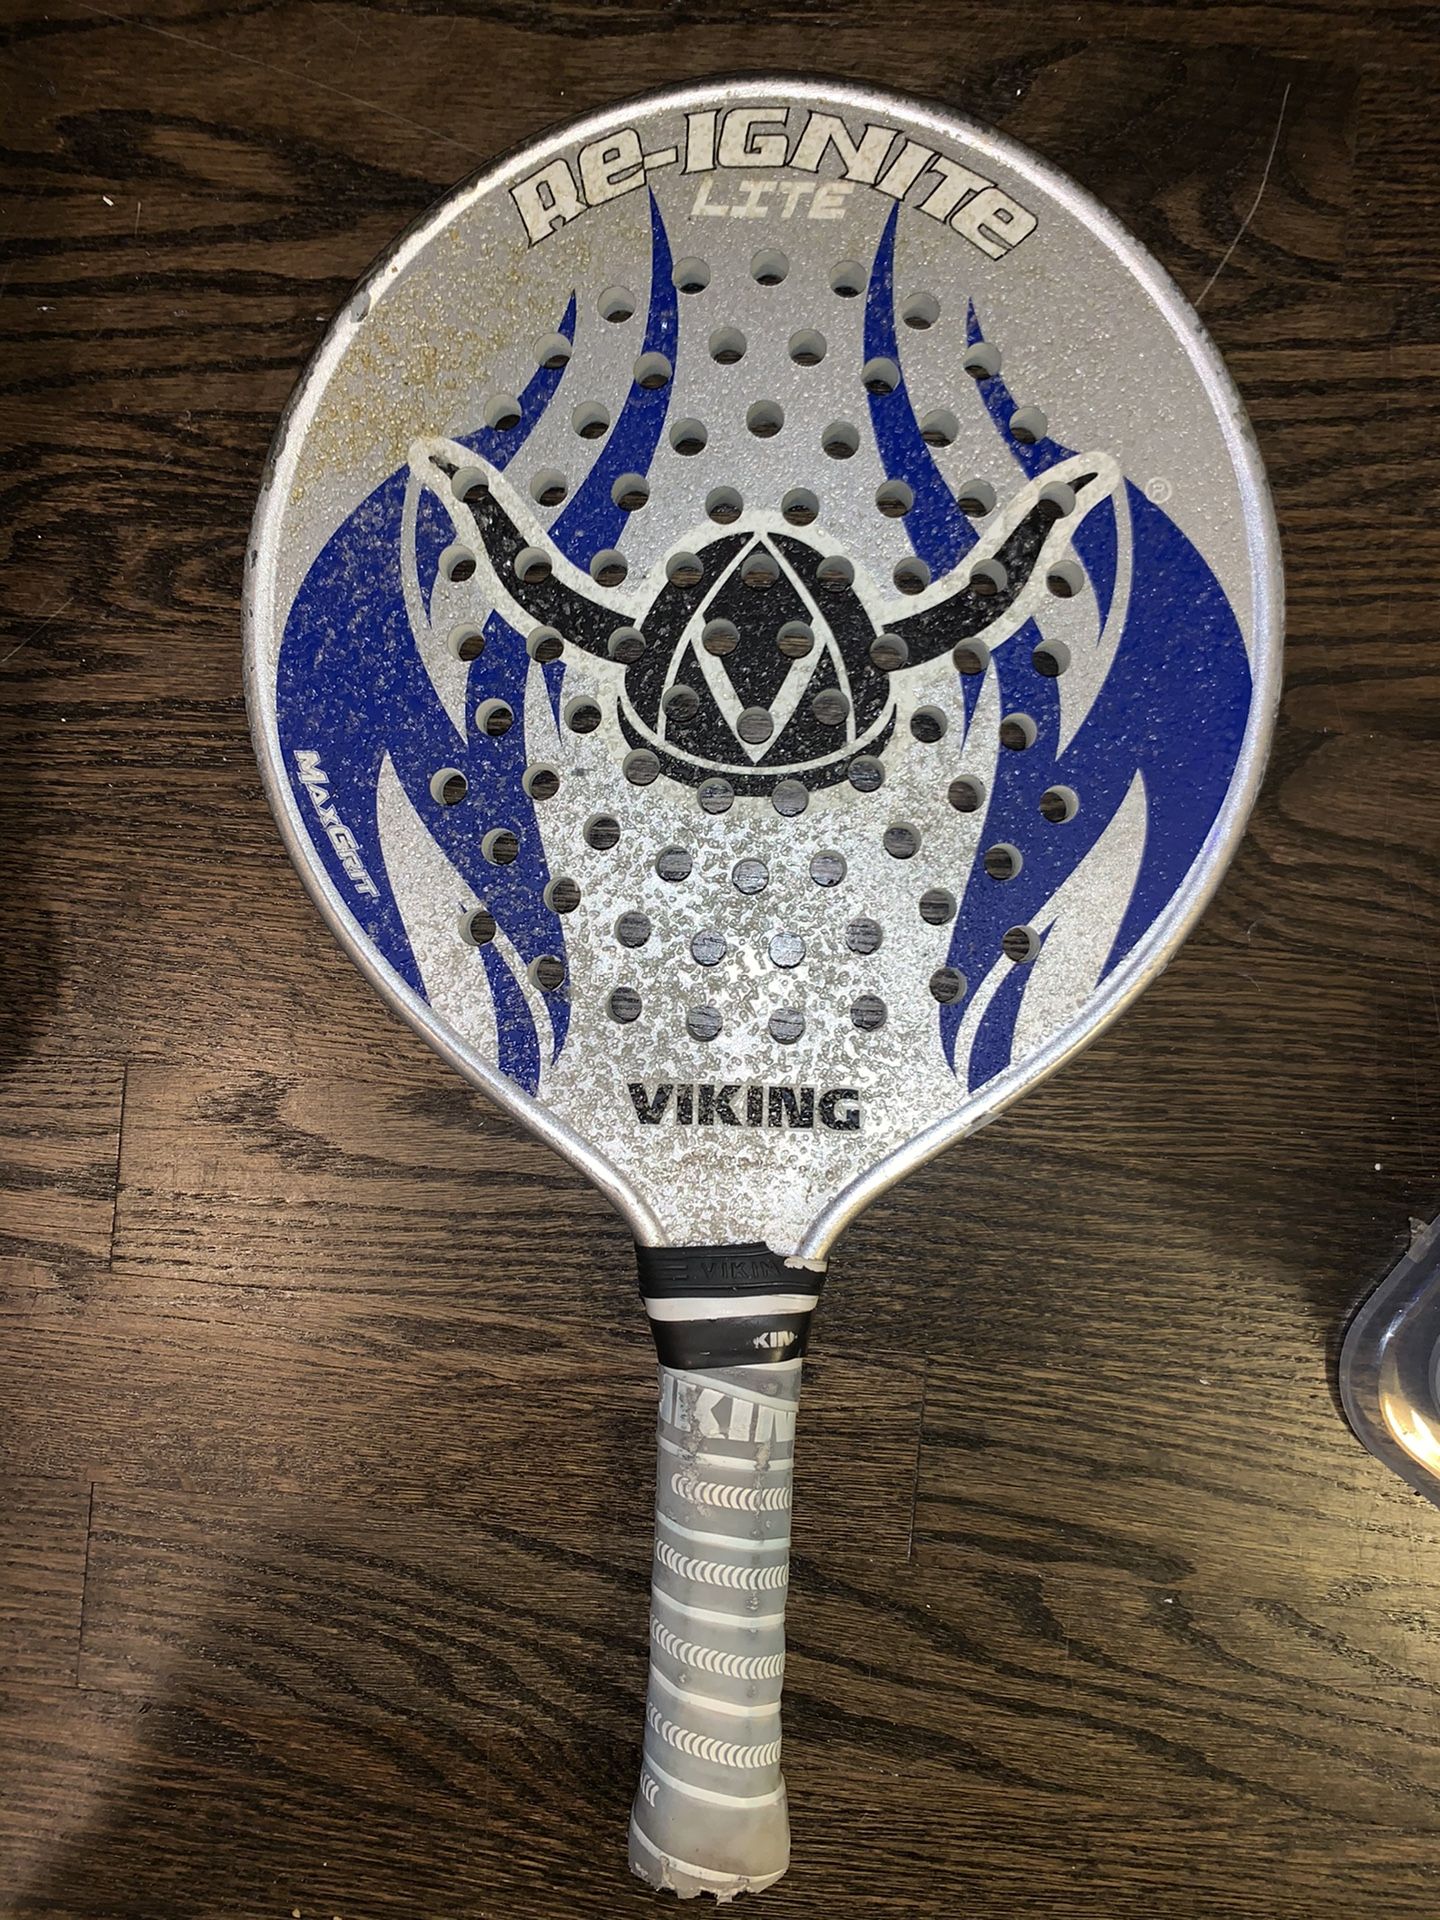 Viking Re-Ignite lite paddle tennis racket